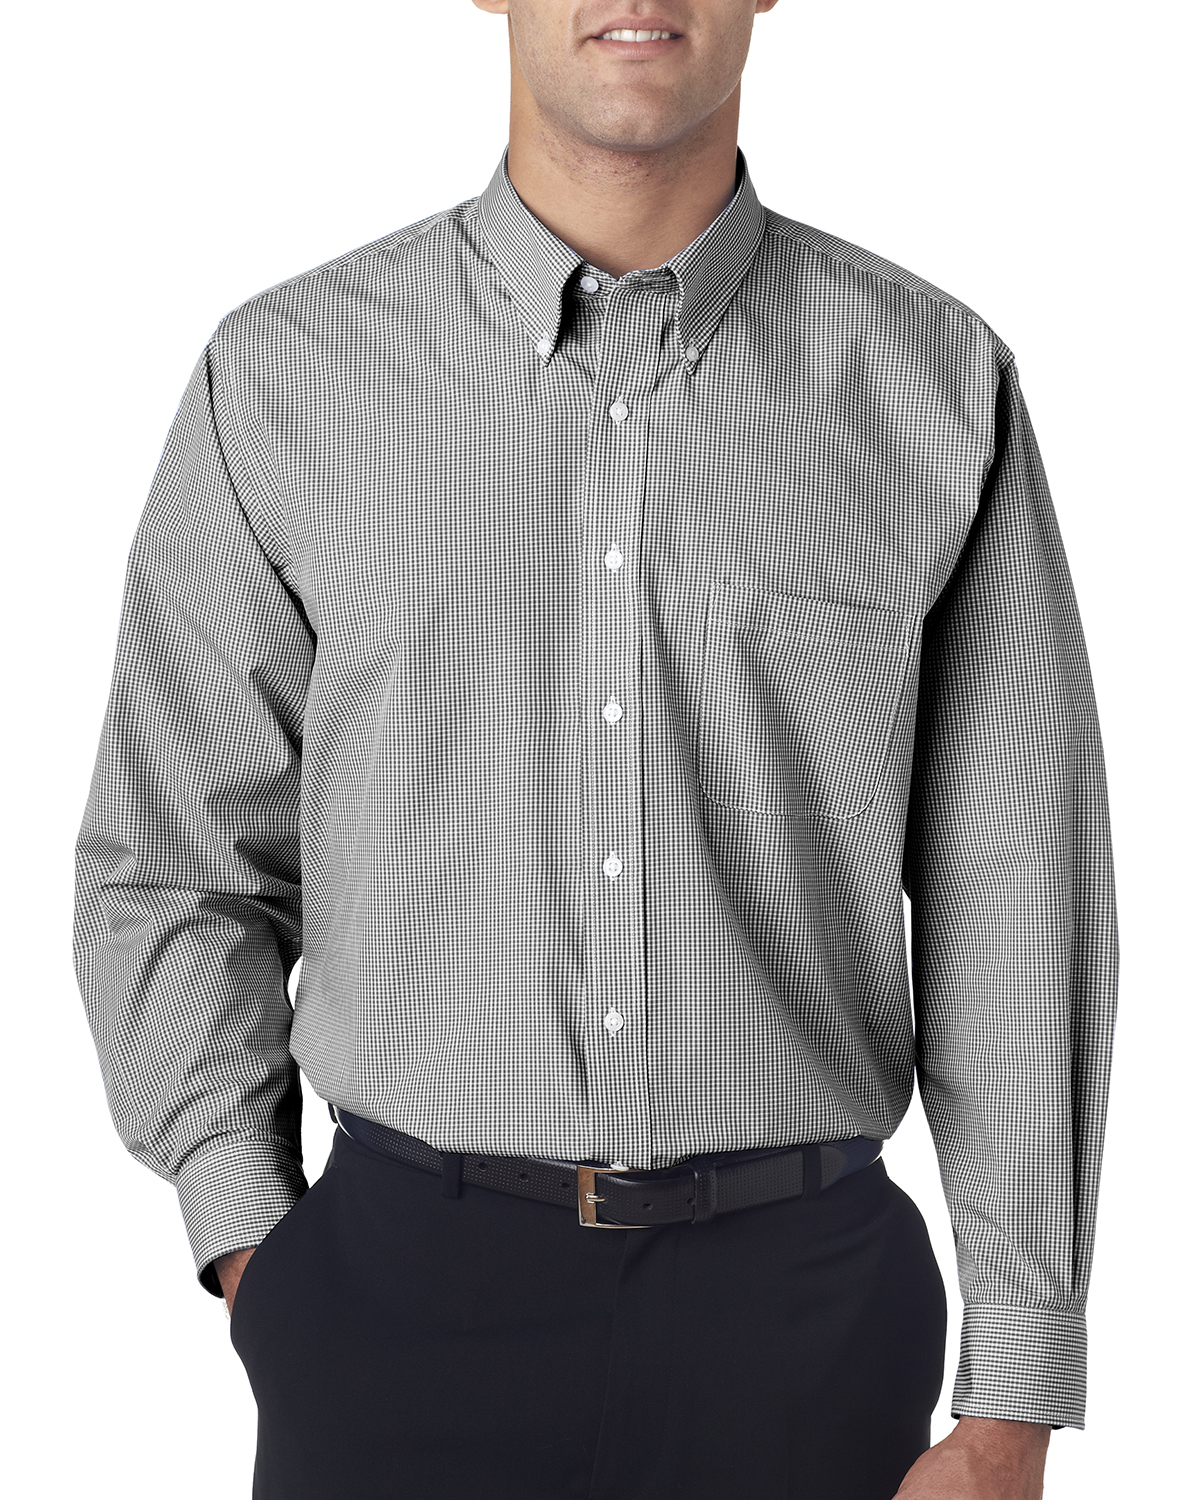 Van Heusen V0225 - Men's Long-Sleeve Yarn-Dyed Gingham Check Shirt